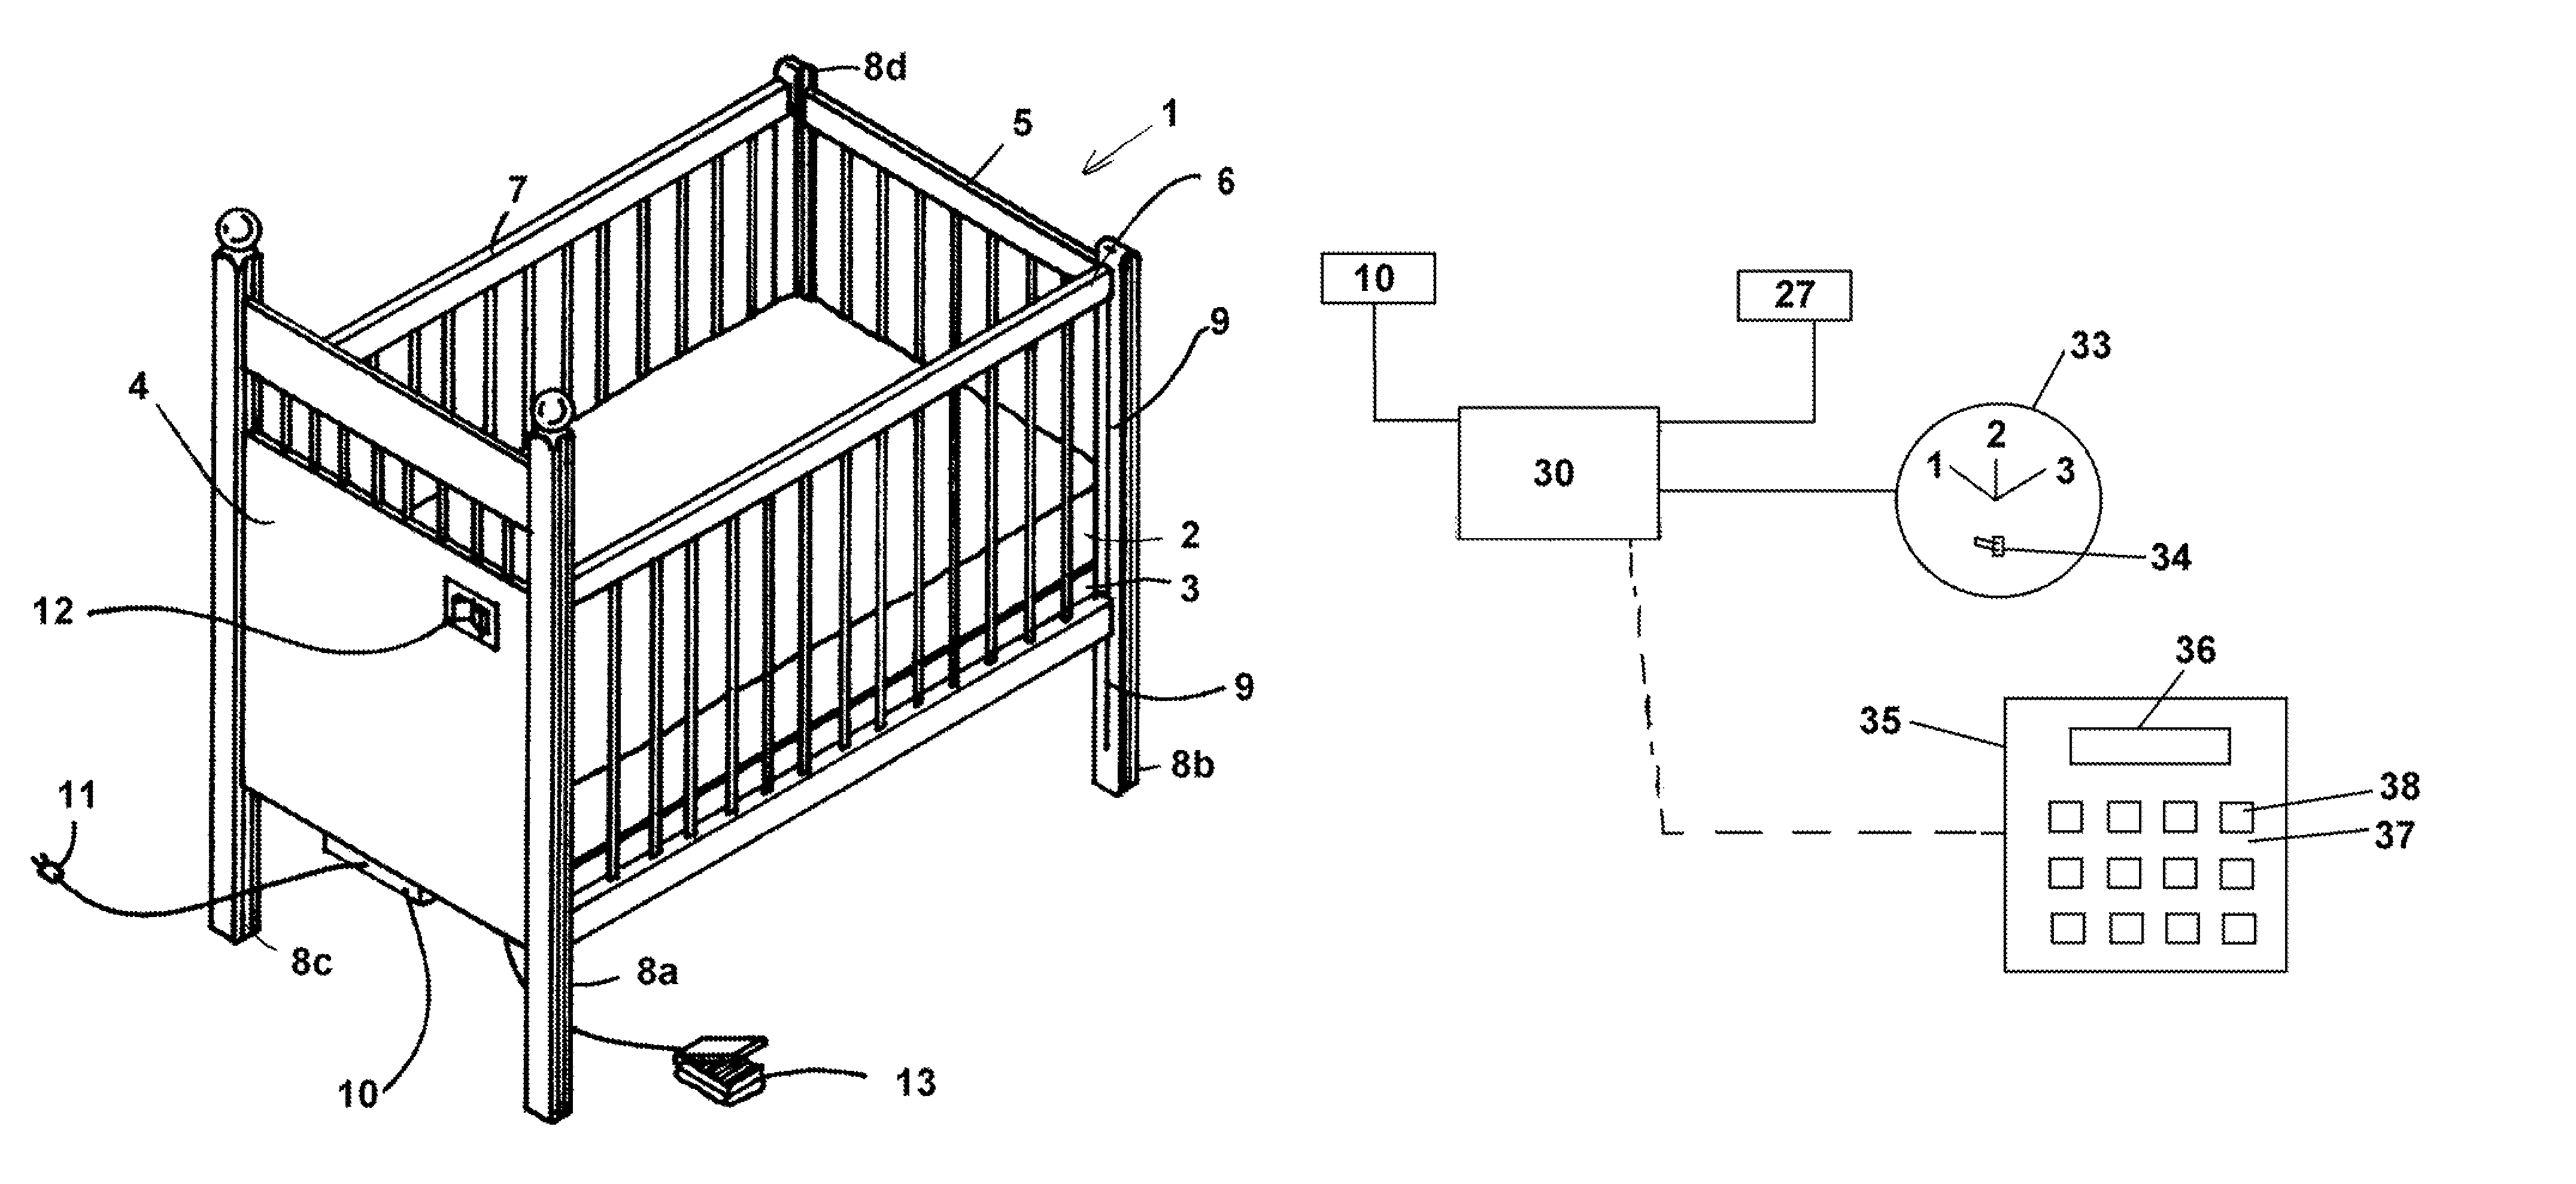 Crib mattress elevation system and control unit